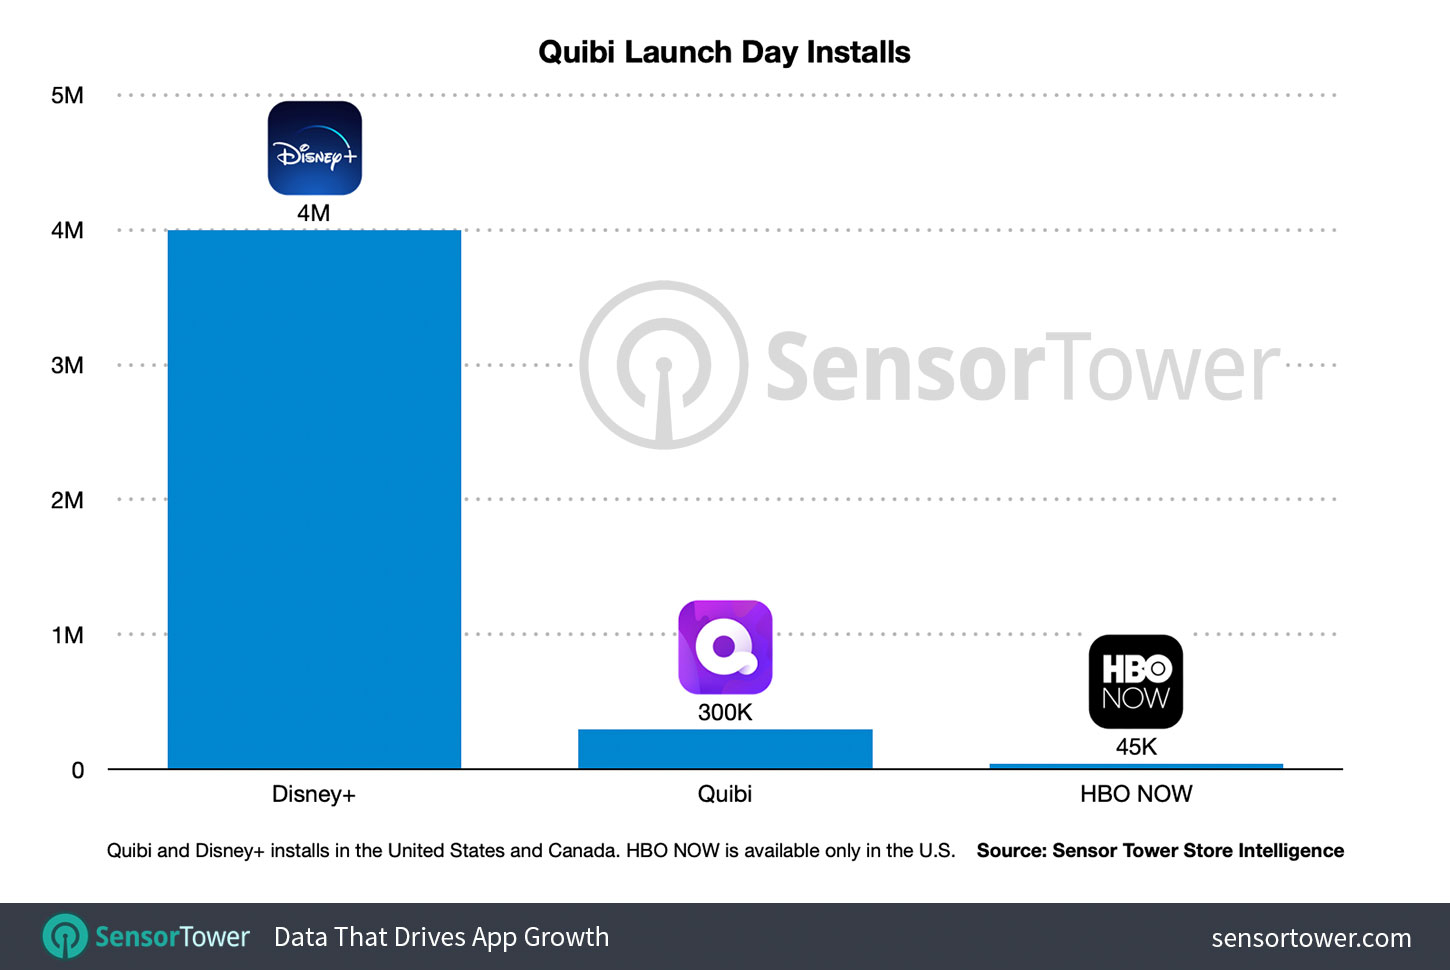 Quibi Day One Downloads Compared to Competitors